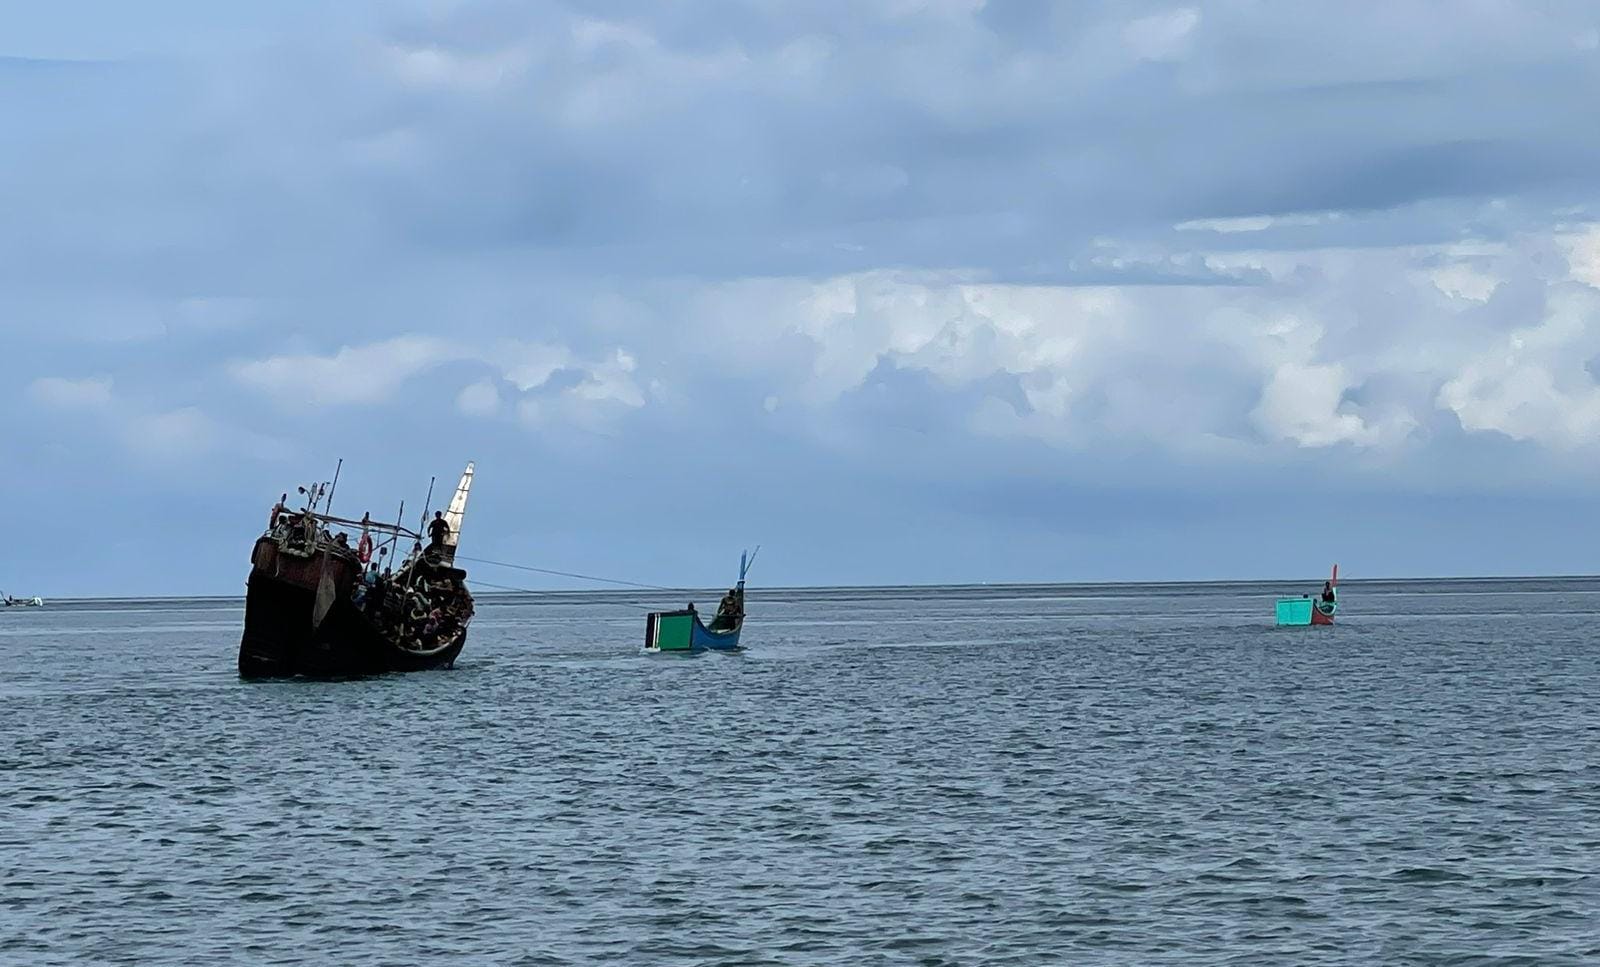 Dua boat kecil milik warga menarik perahu etnis Rohingya ke laut saat ingin mendarat di tepi pantai Gampong Pulo Pineung Meunasah Dua, Kecamatan Jangka, Kabupaten Bireuen, Provinsi Aceh, Kamis (16/11) dini hari sekira pukul 04.30 WIB.